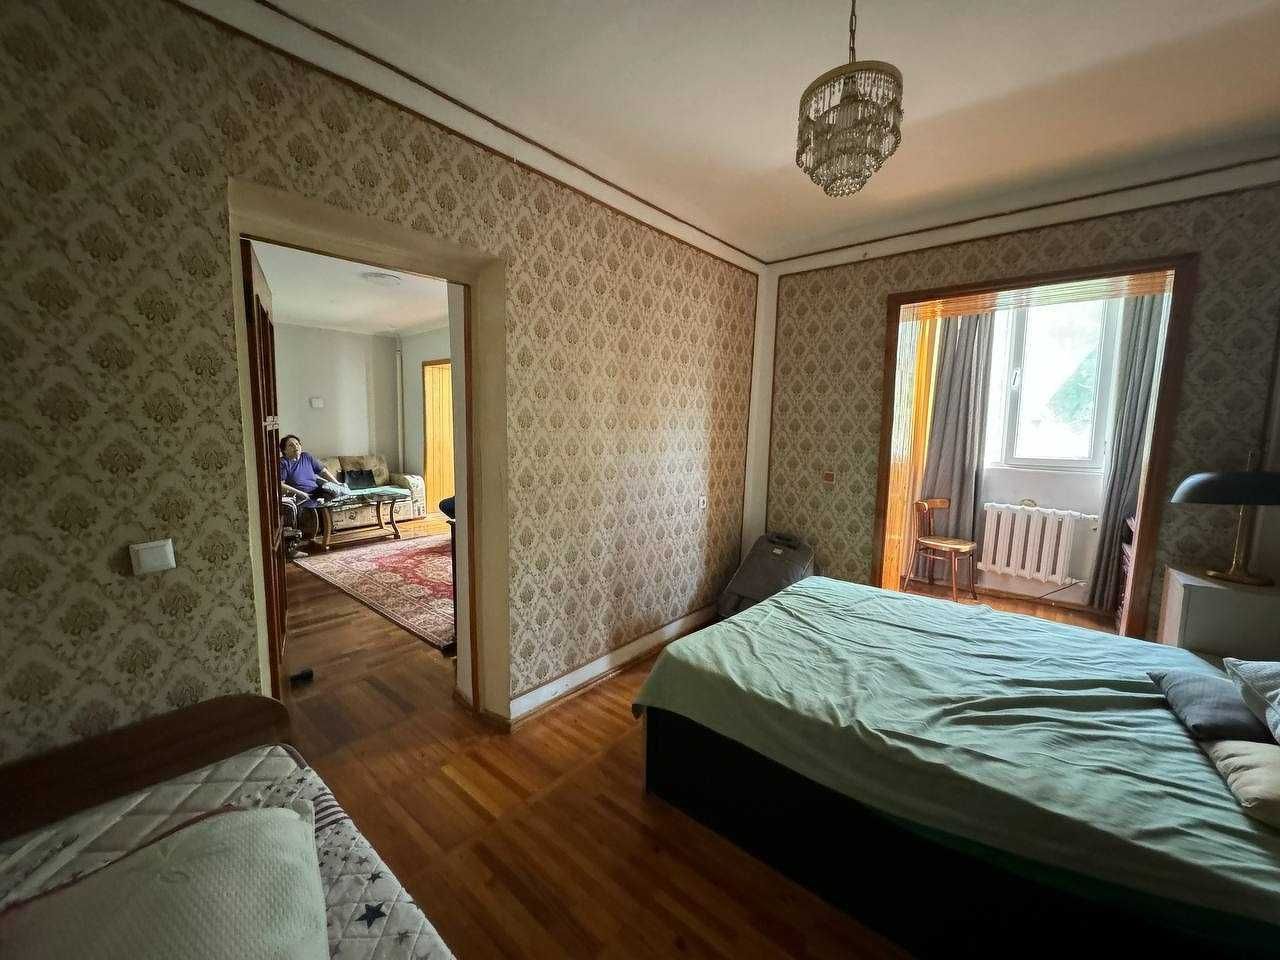 Продам 2-комнатную квартиру на Ц6, Ор-р ЖК Казахстан (0111)